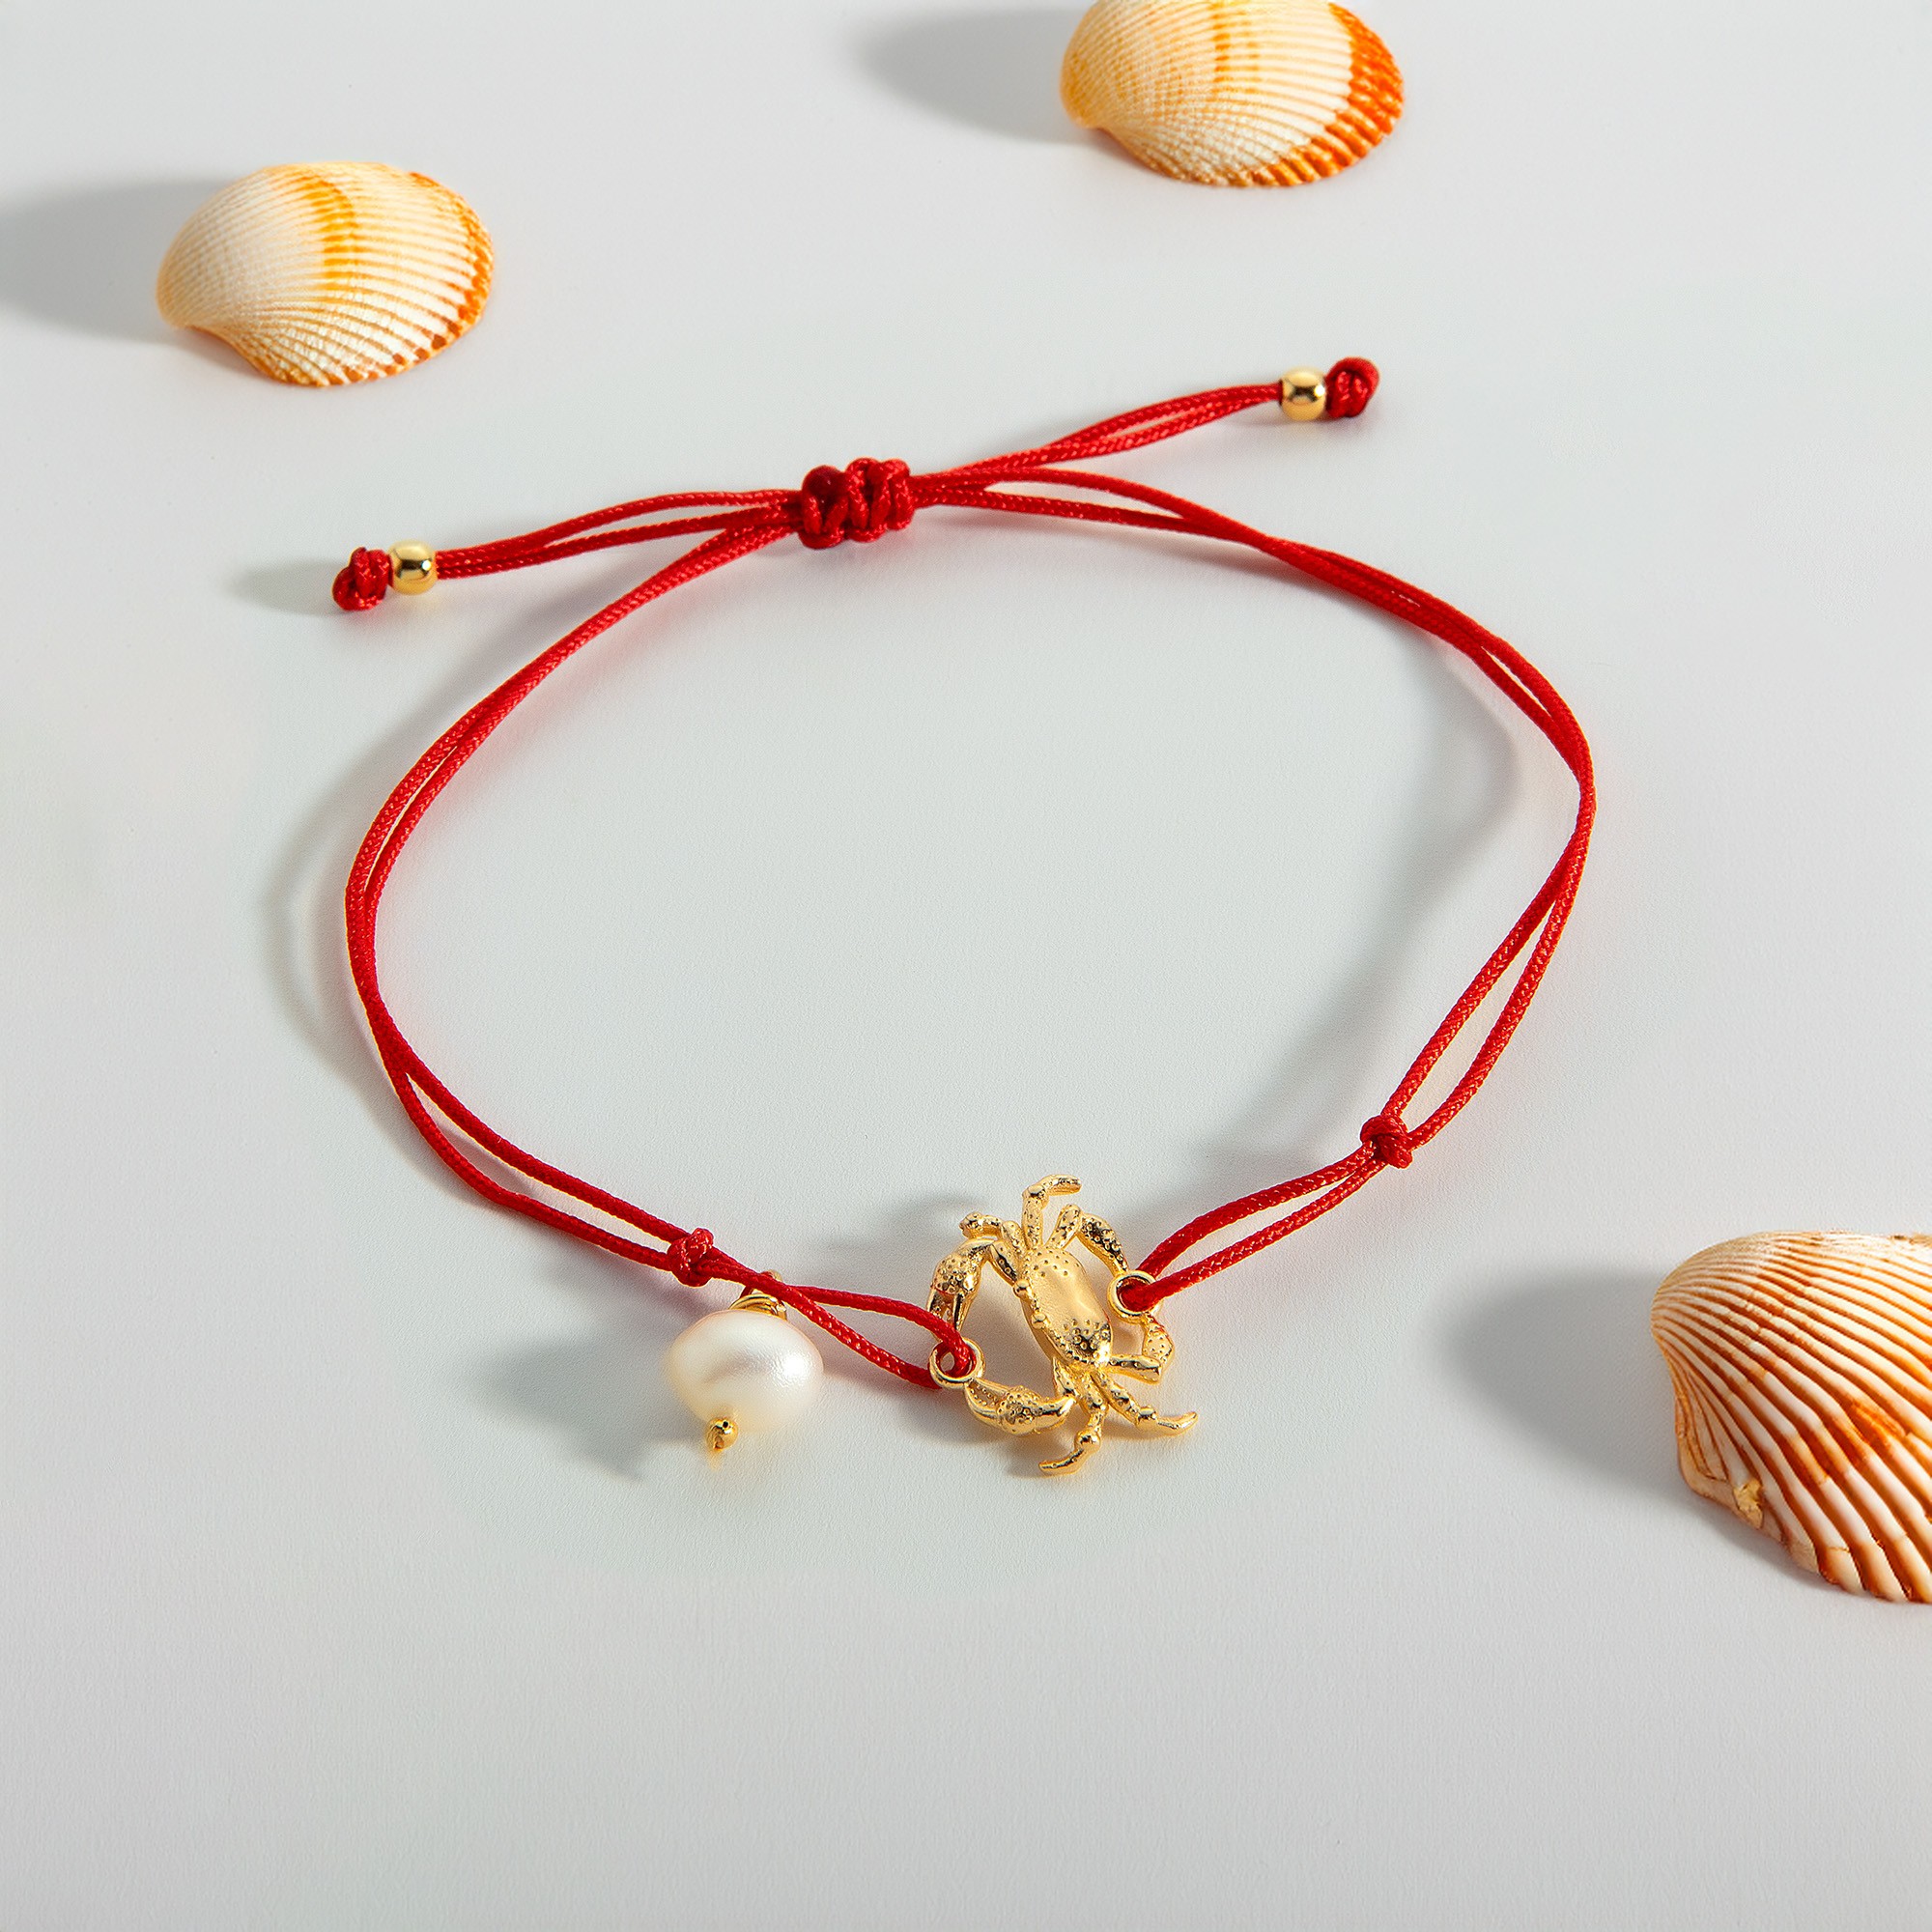 The Crab String Pendant